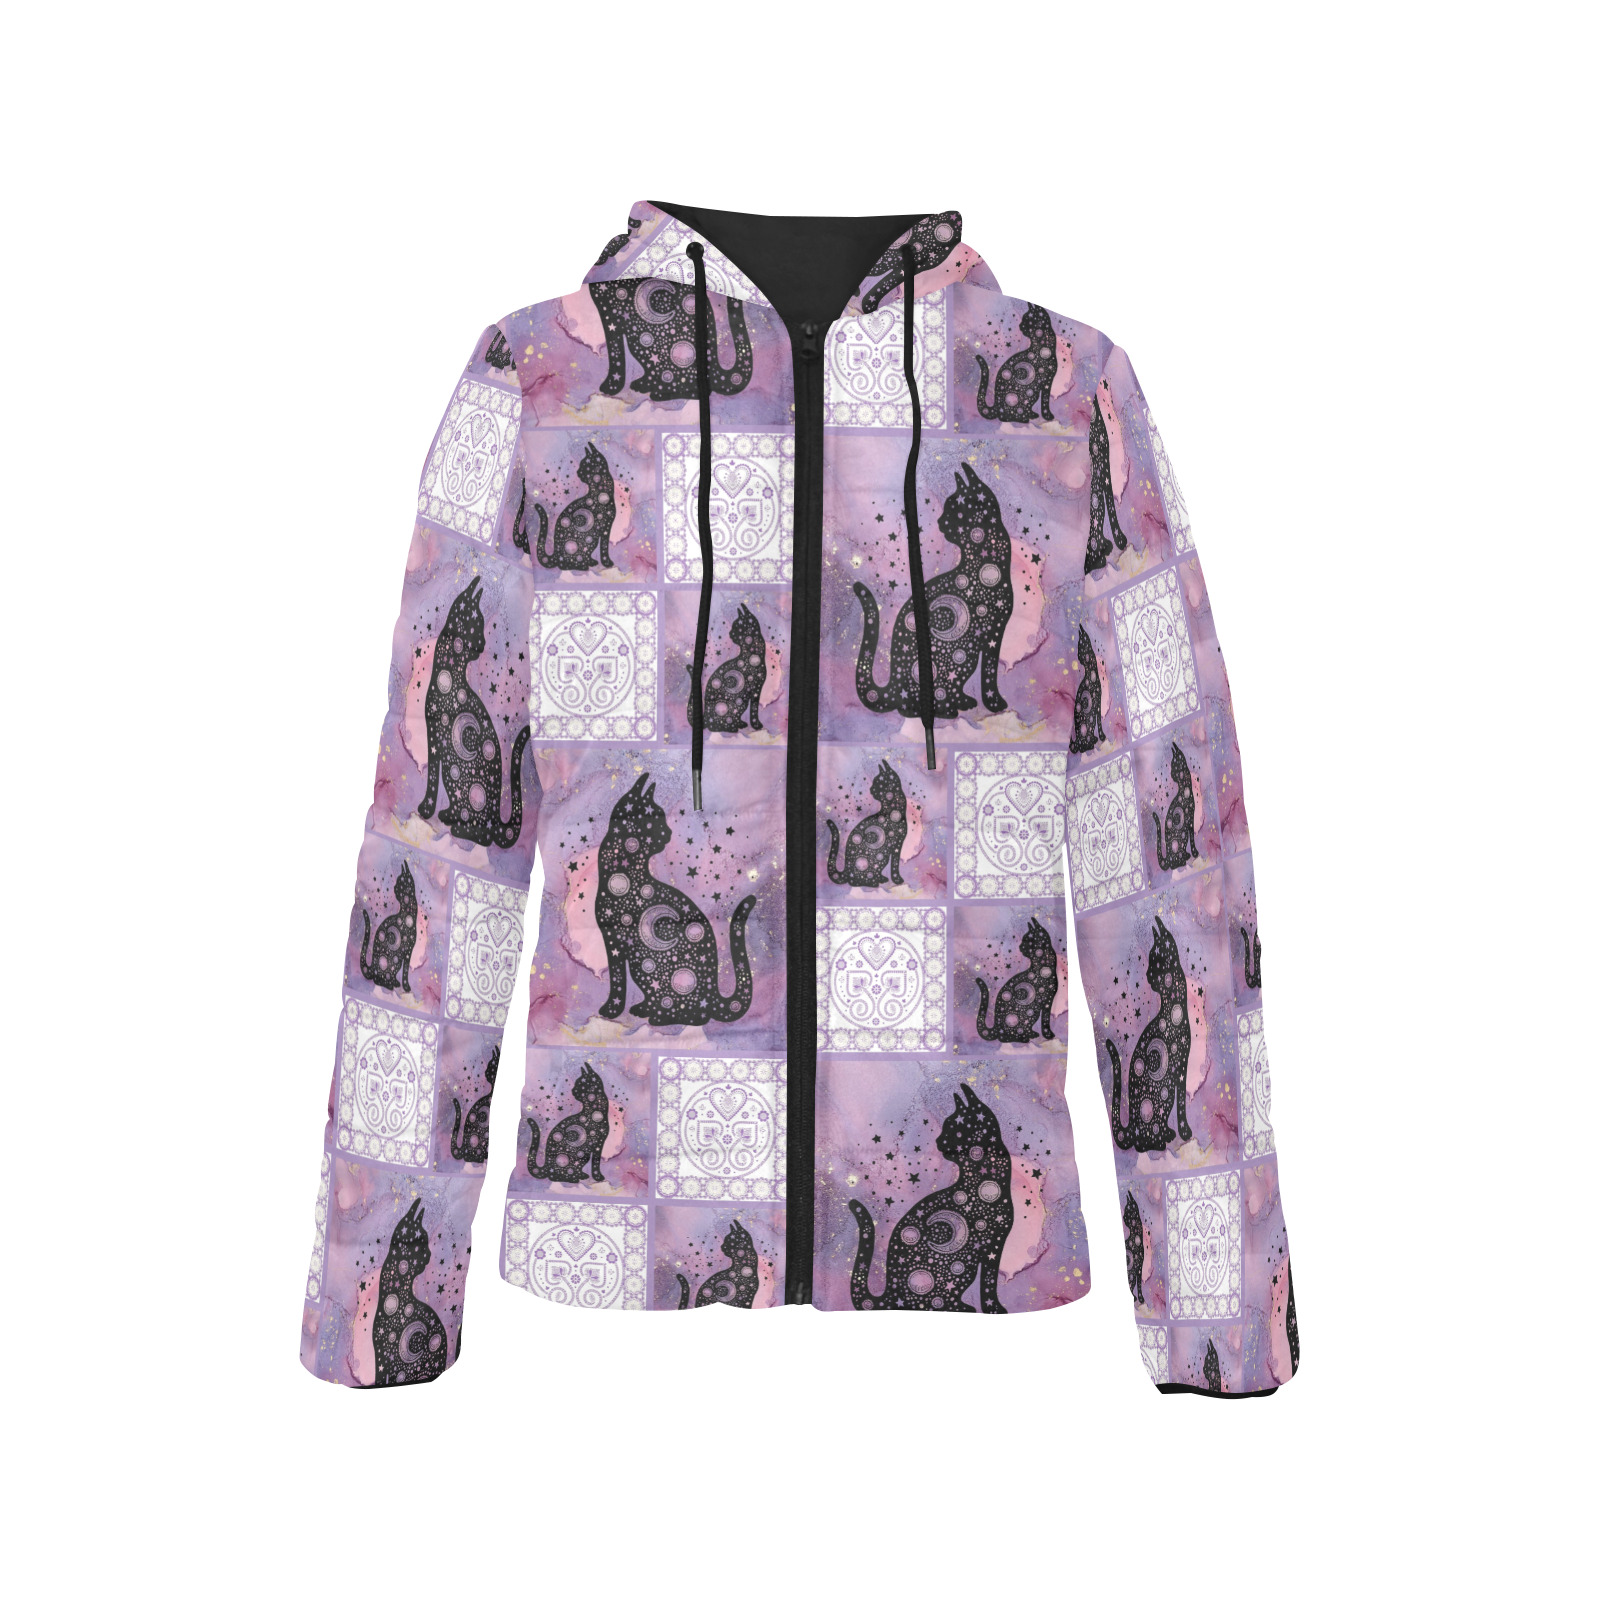 Purple Cosmic Cats Patchwork Pattern Women's Padded Hooded Jacket (Model H46)